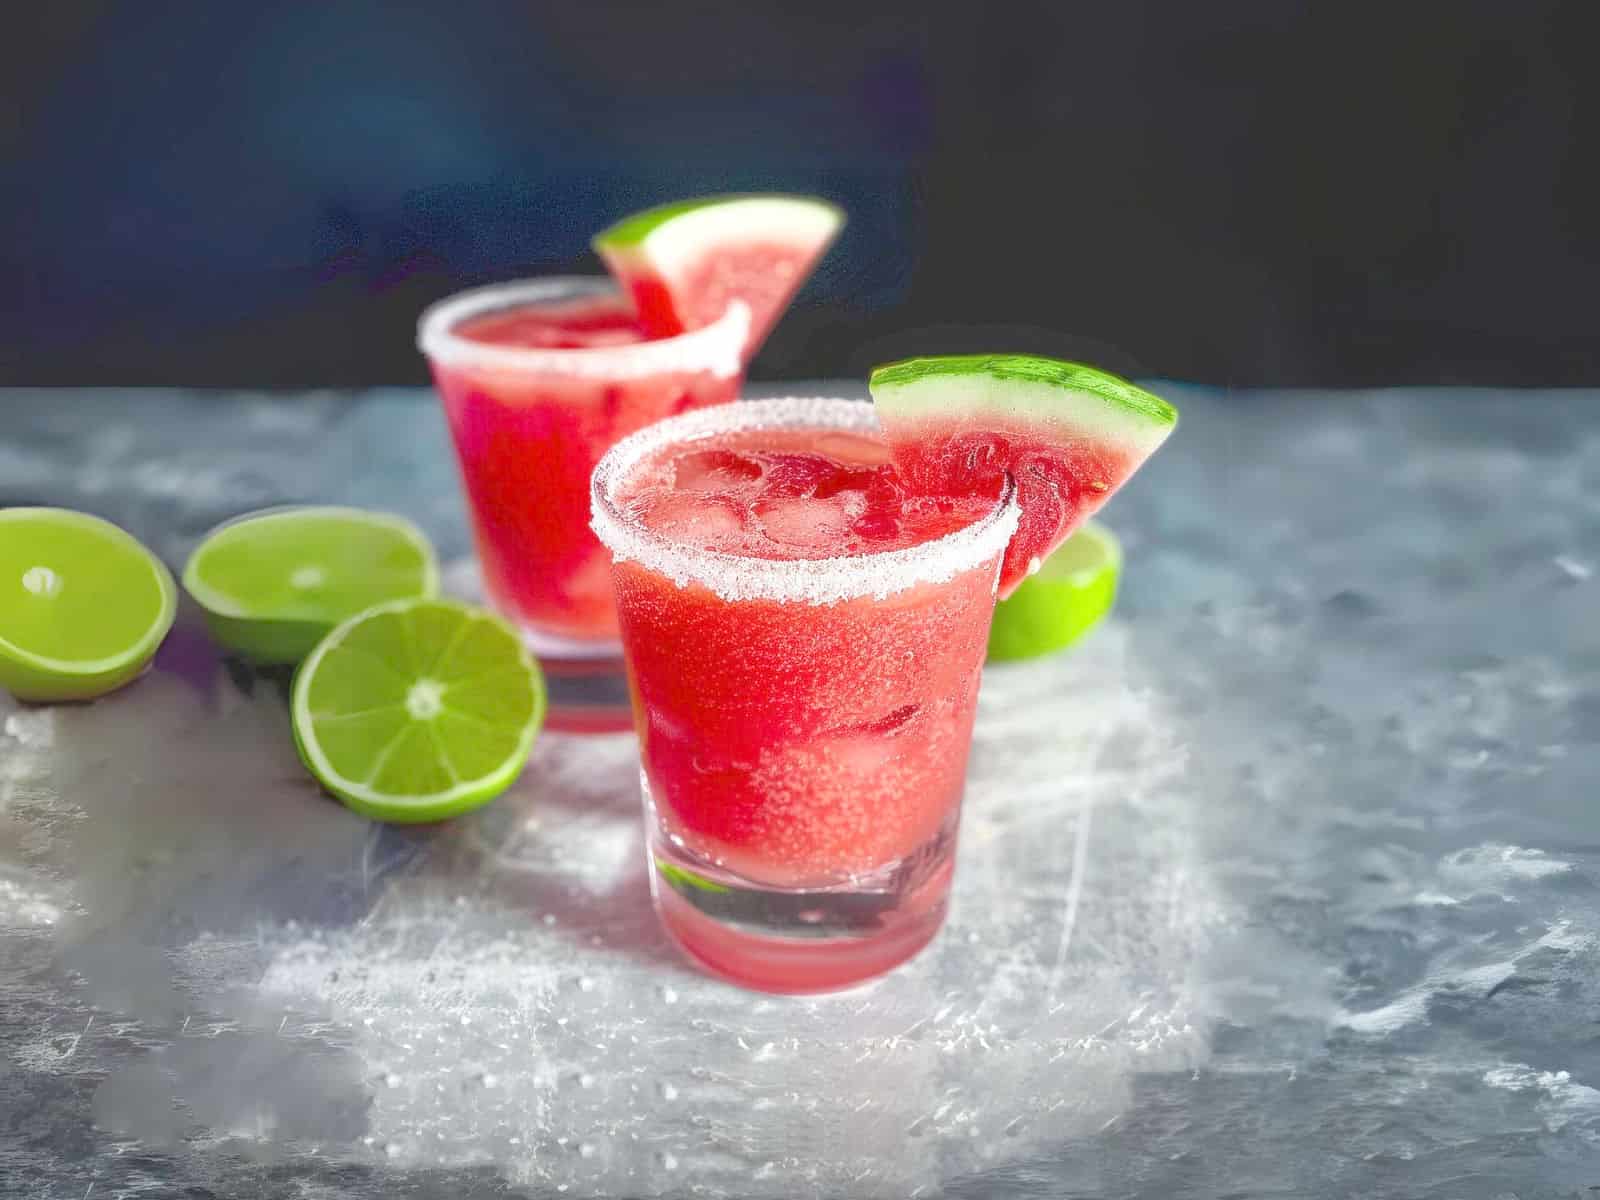 Watermelon Margaritas with sugar rim against black background